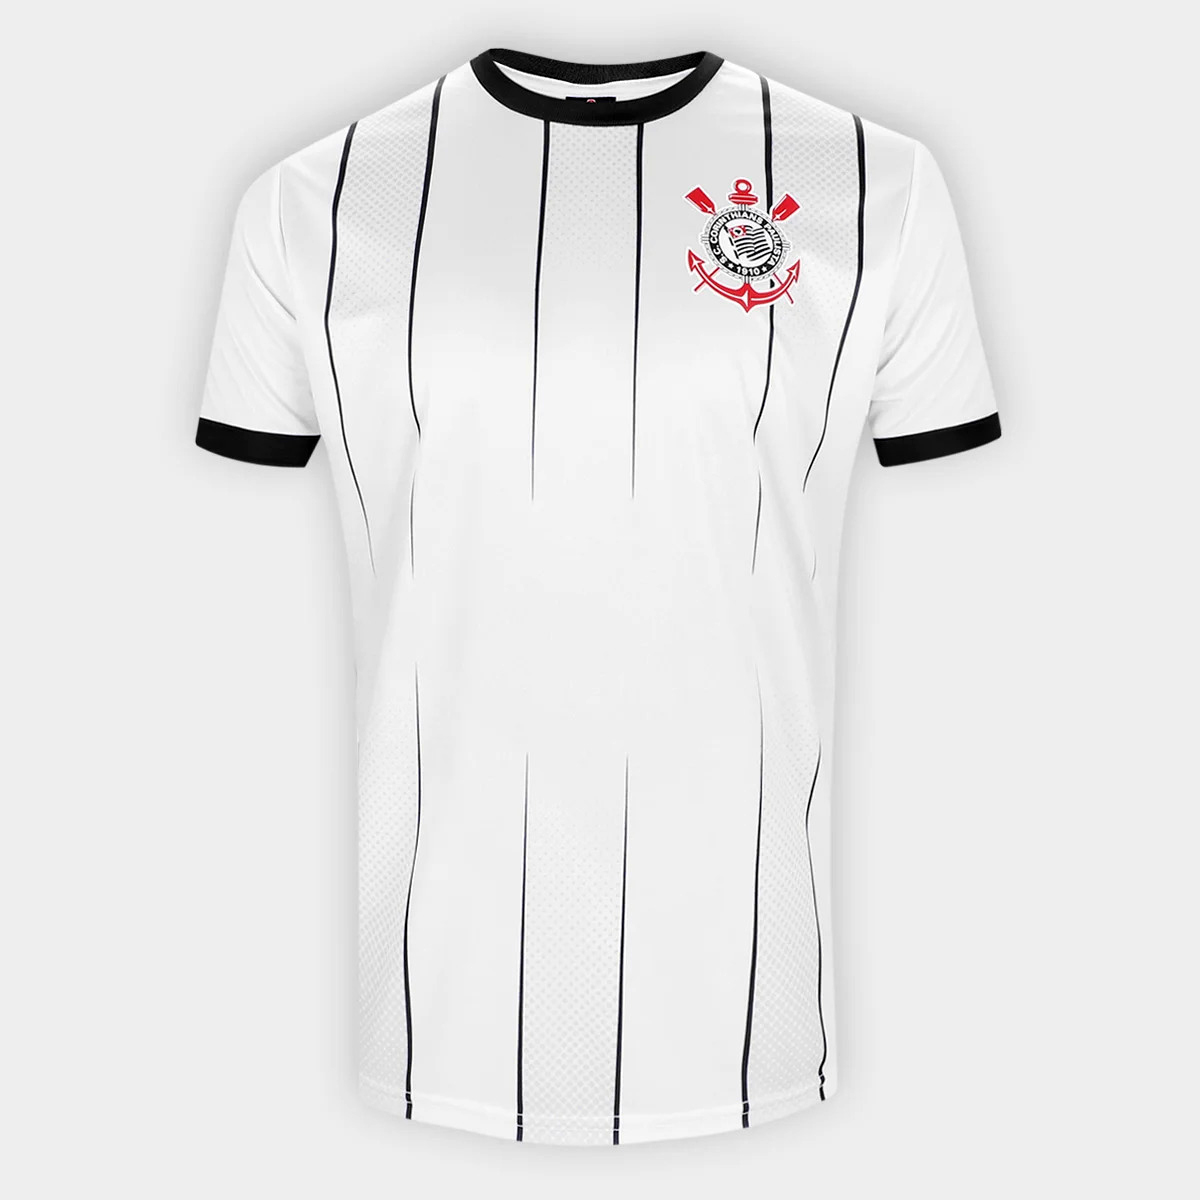 Camiseta Corinthians Layer Masculina Branco e Preto - Compre Agora